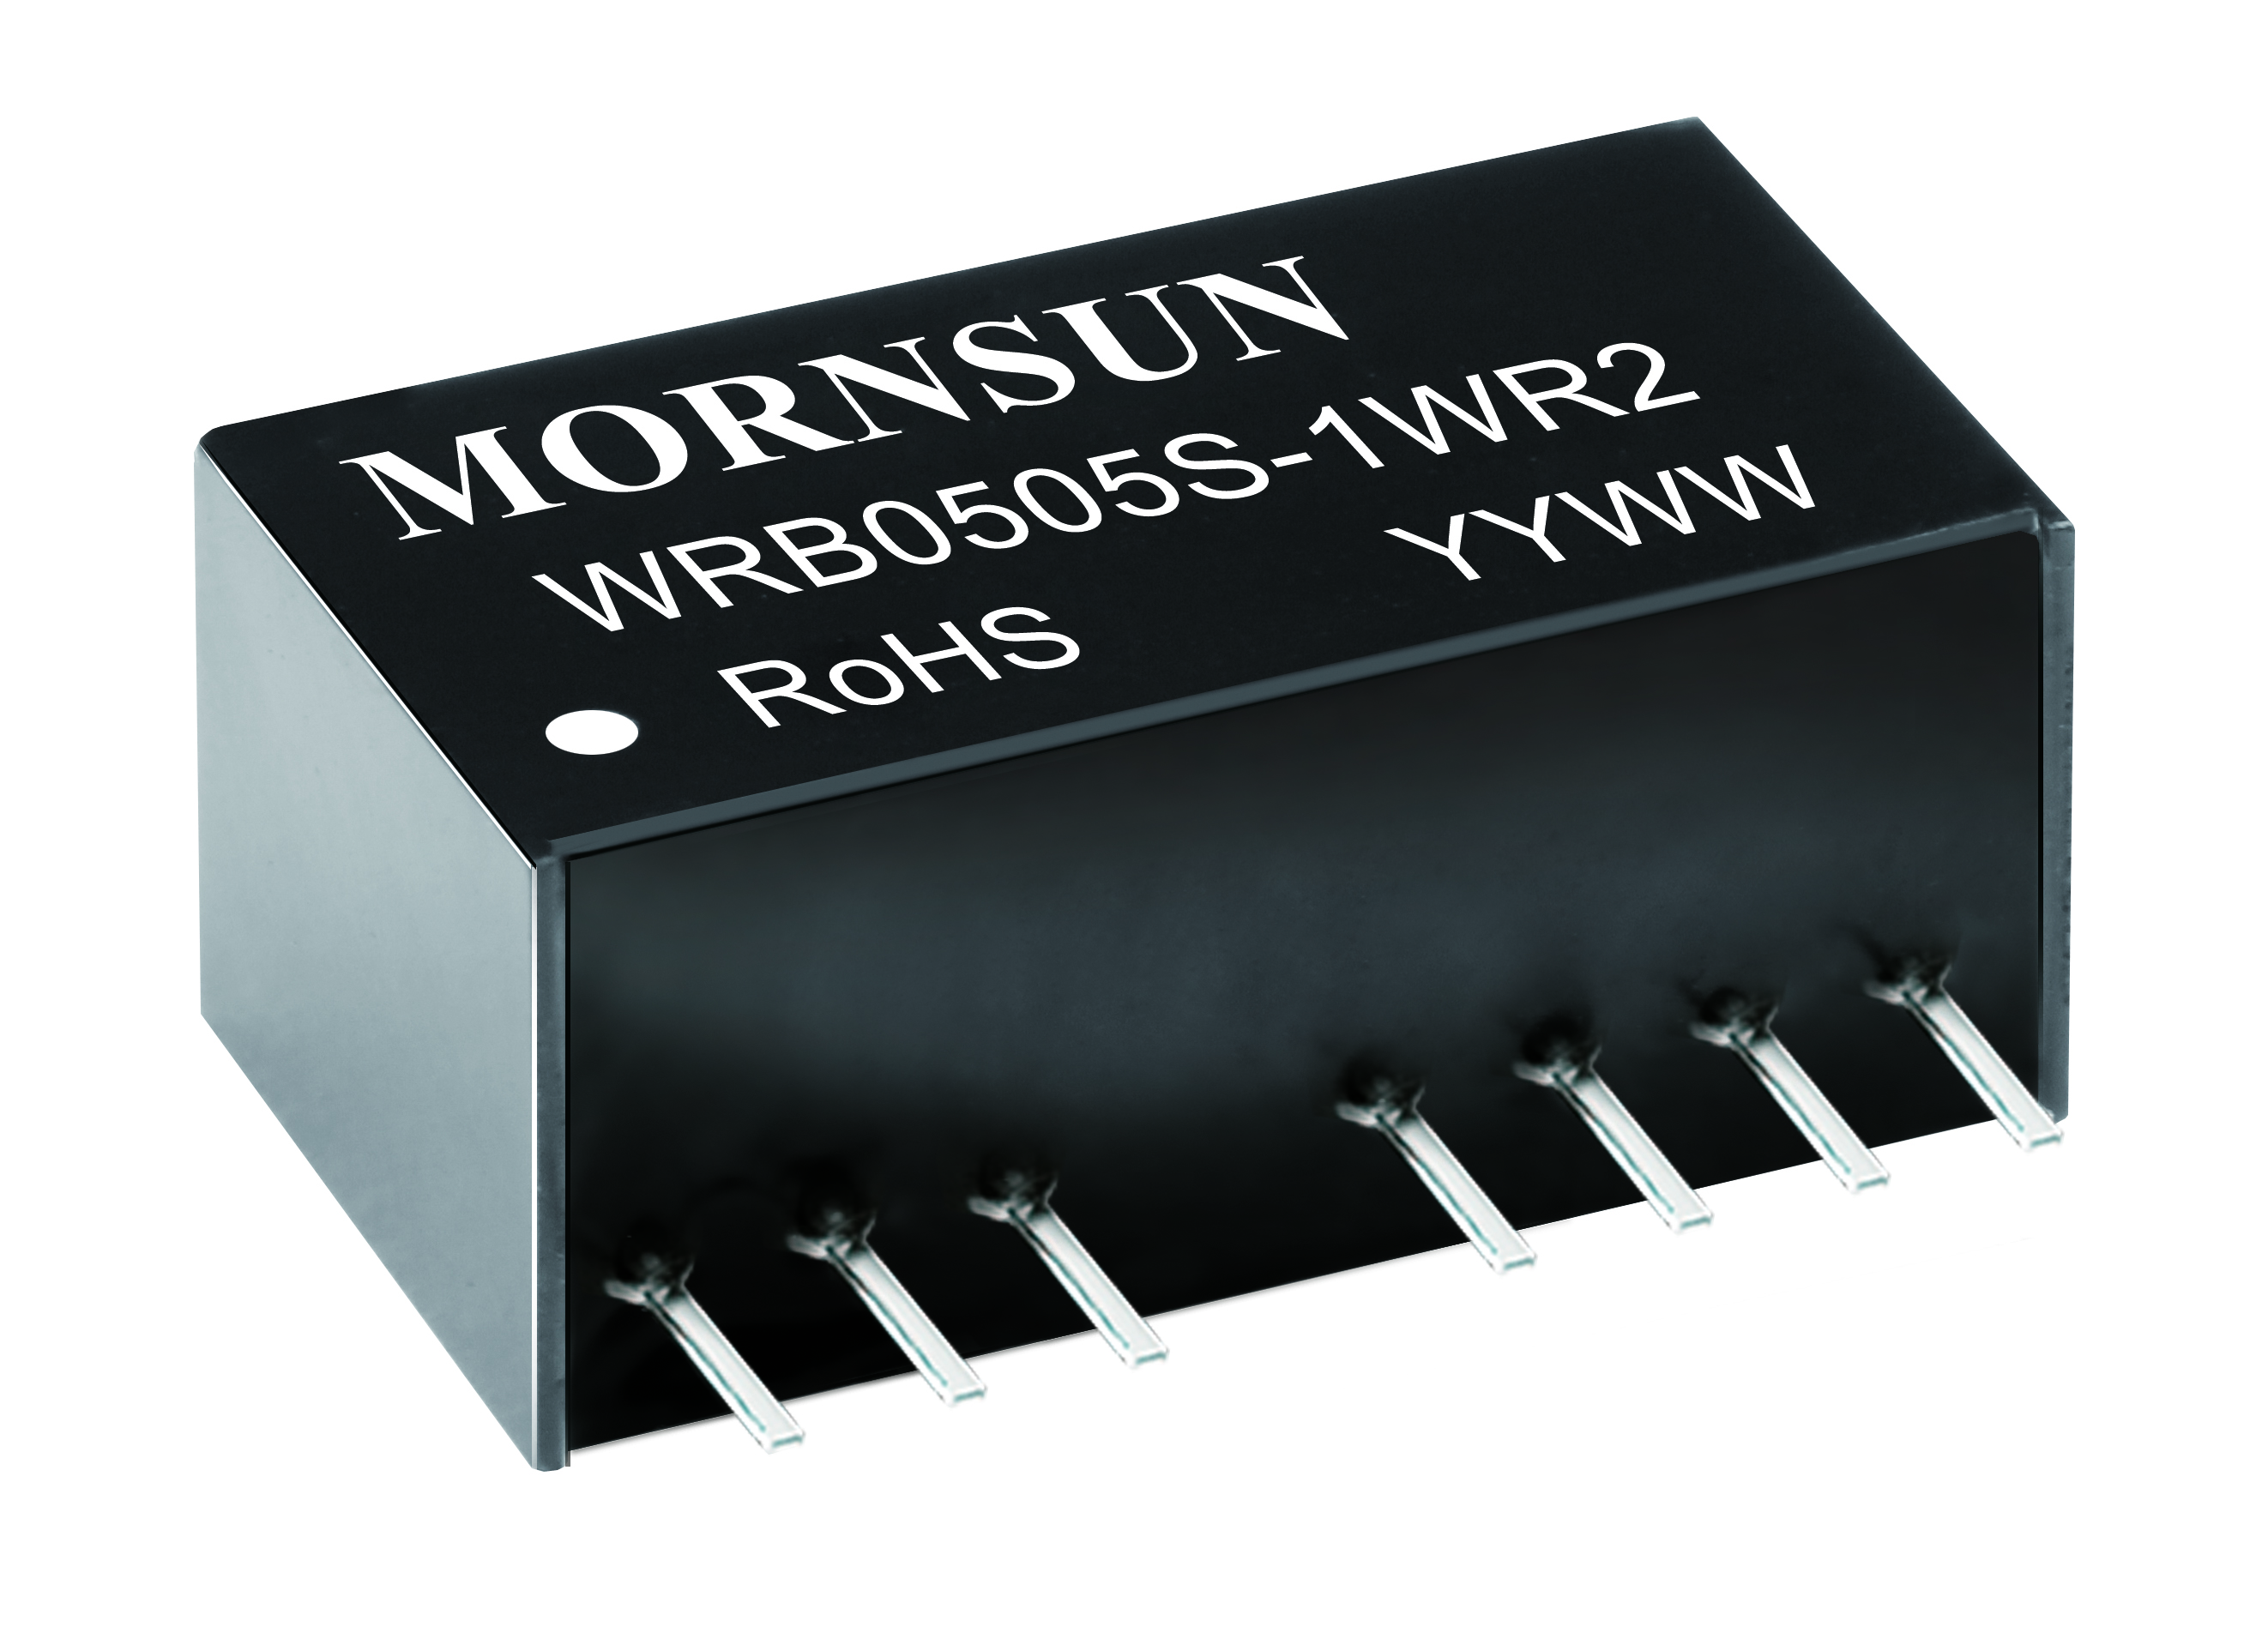 WRB0524S-1WR2 | MORNSUN